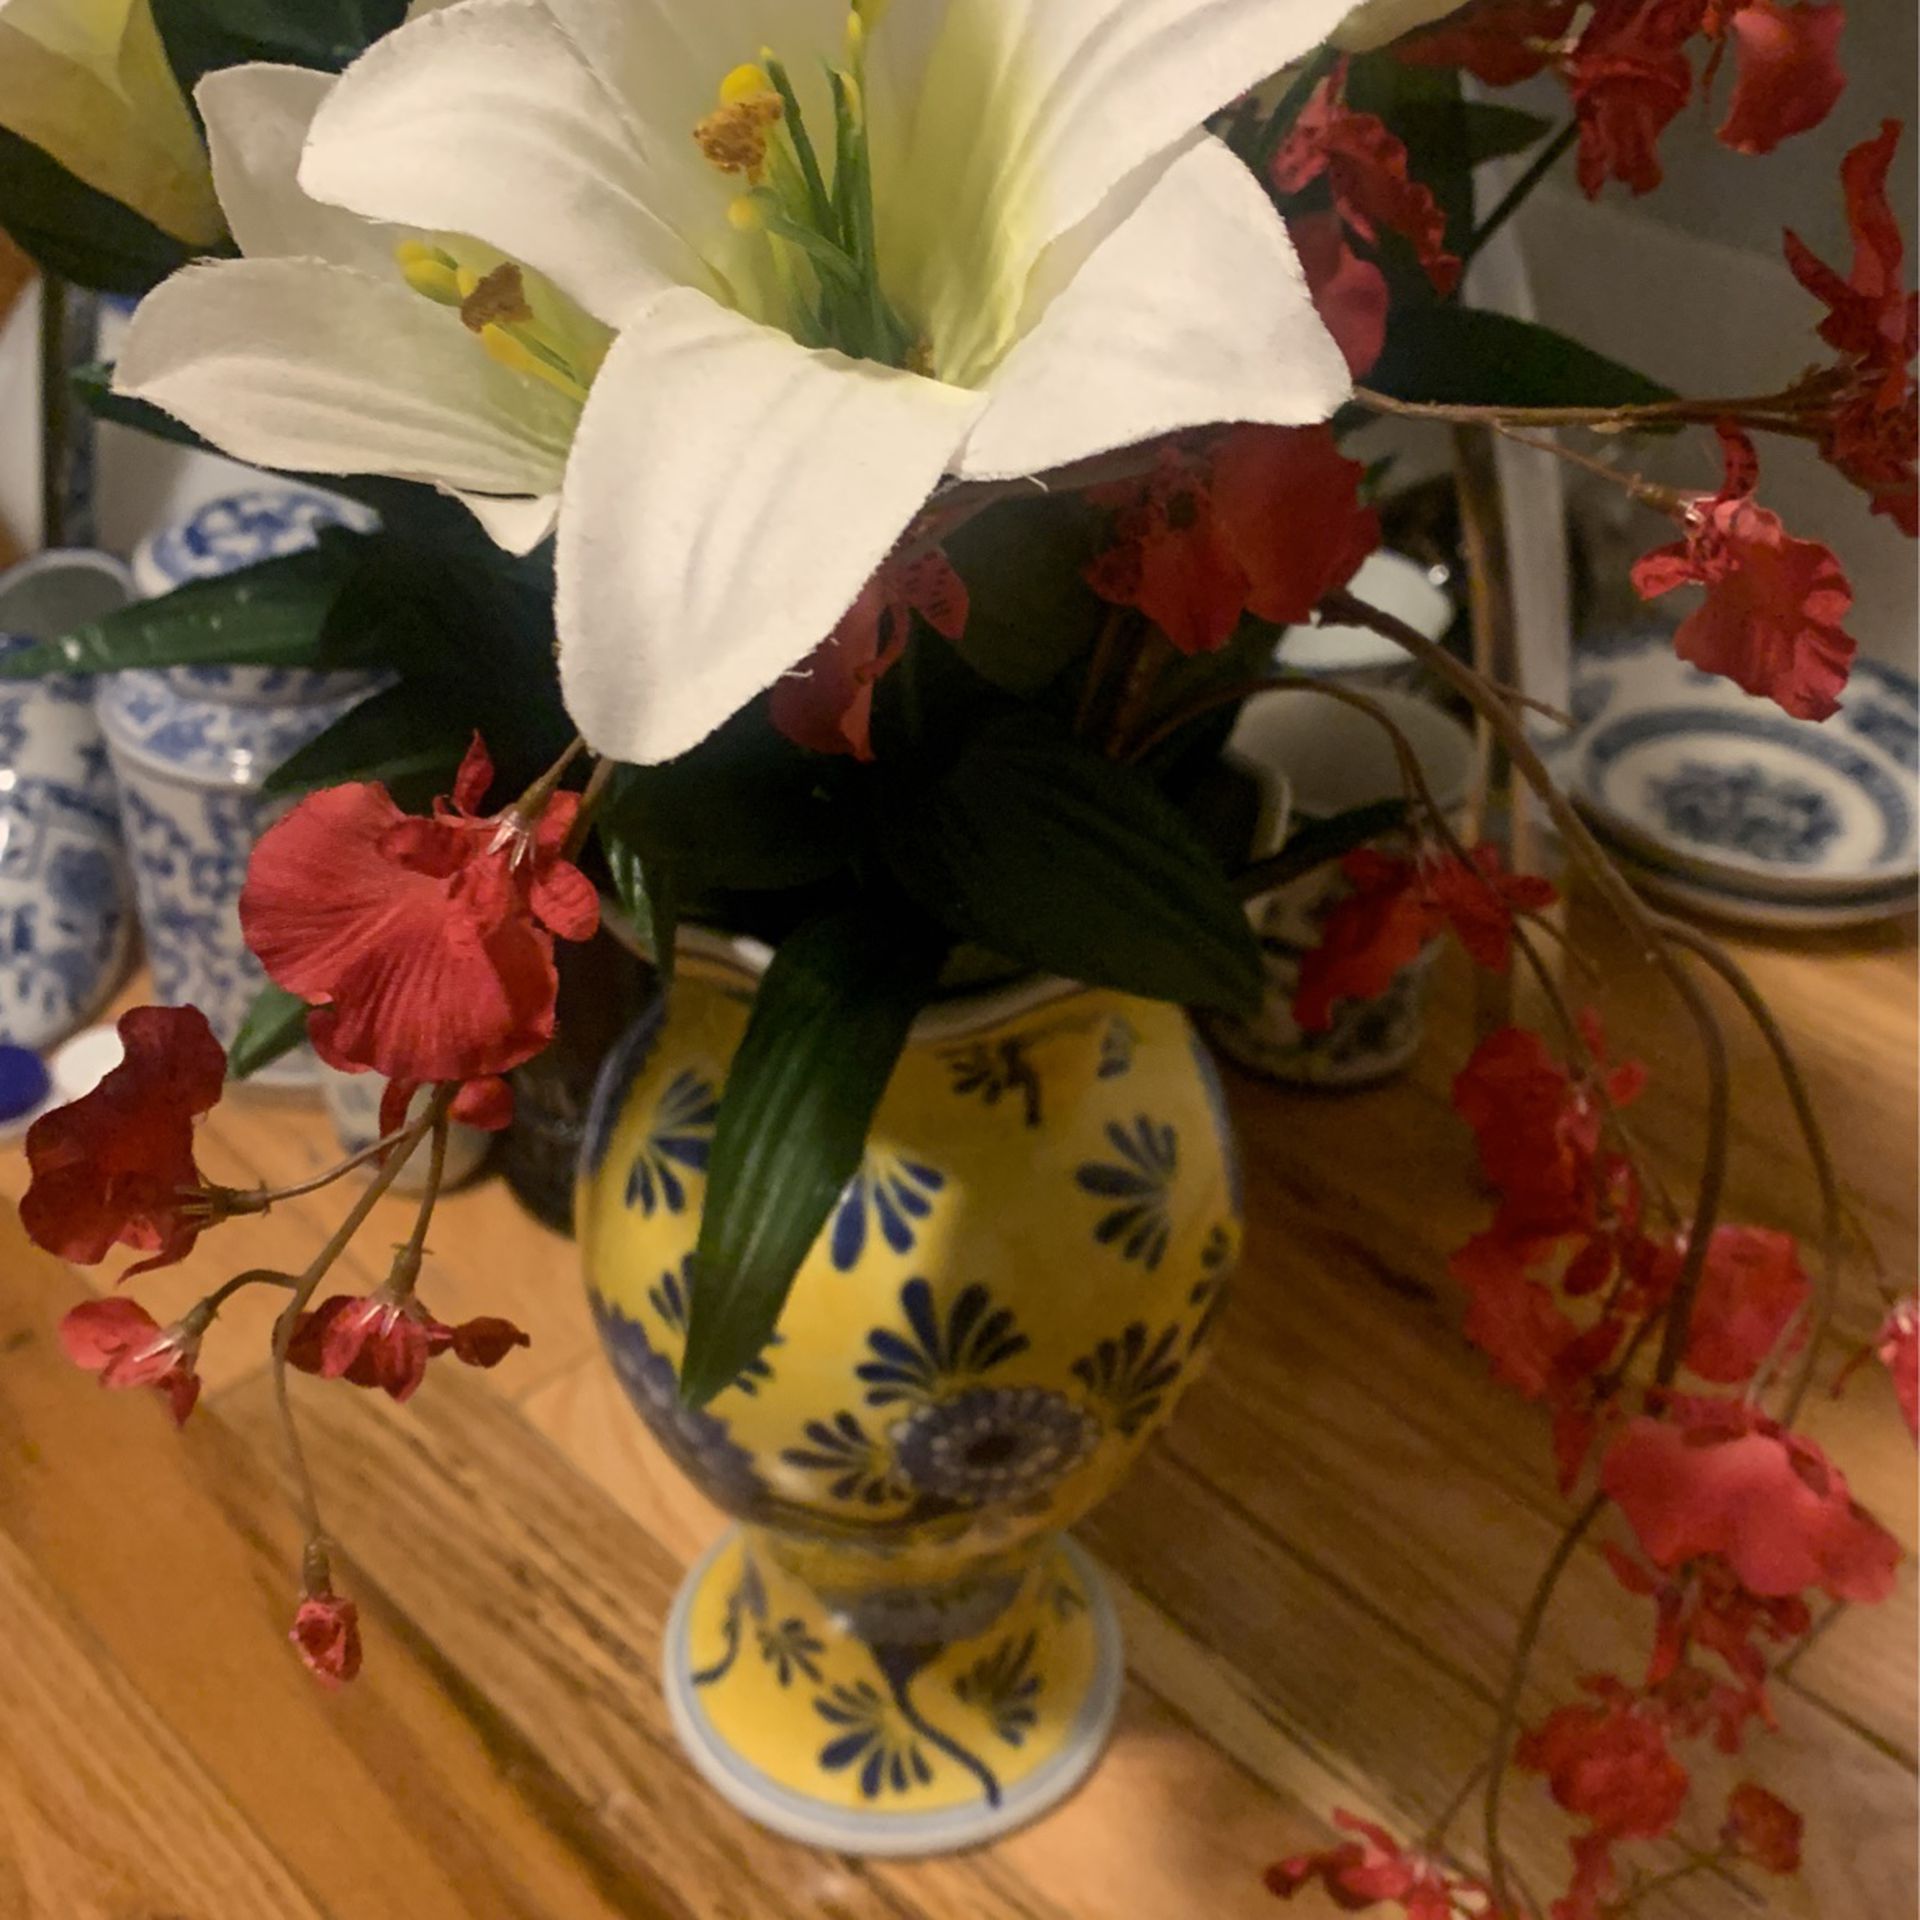 Beautiful Vase with fake flowers